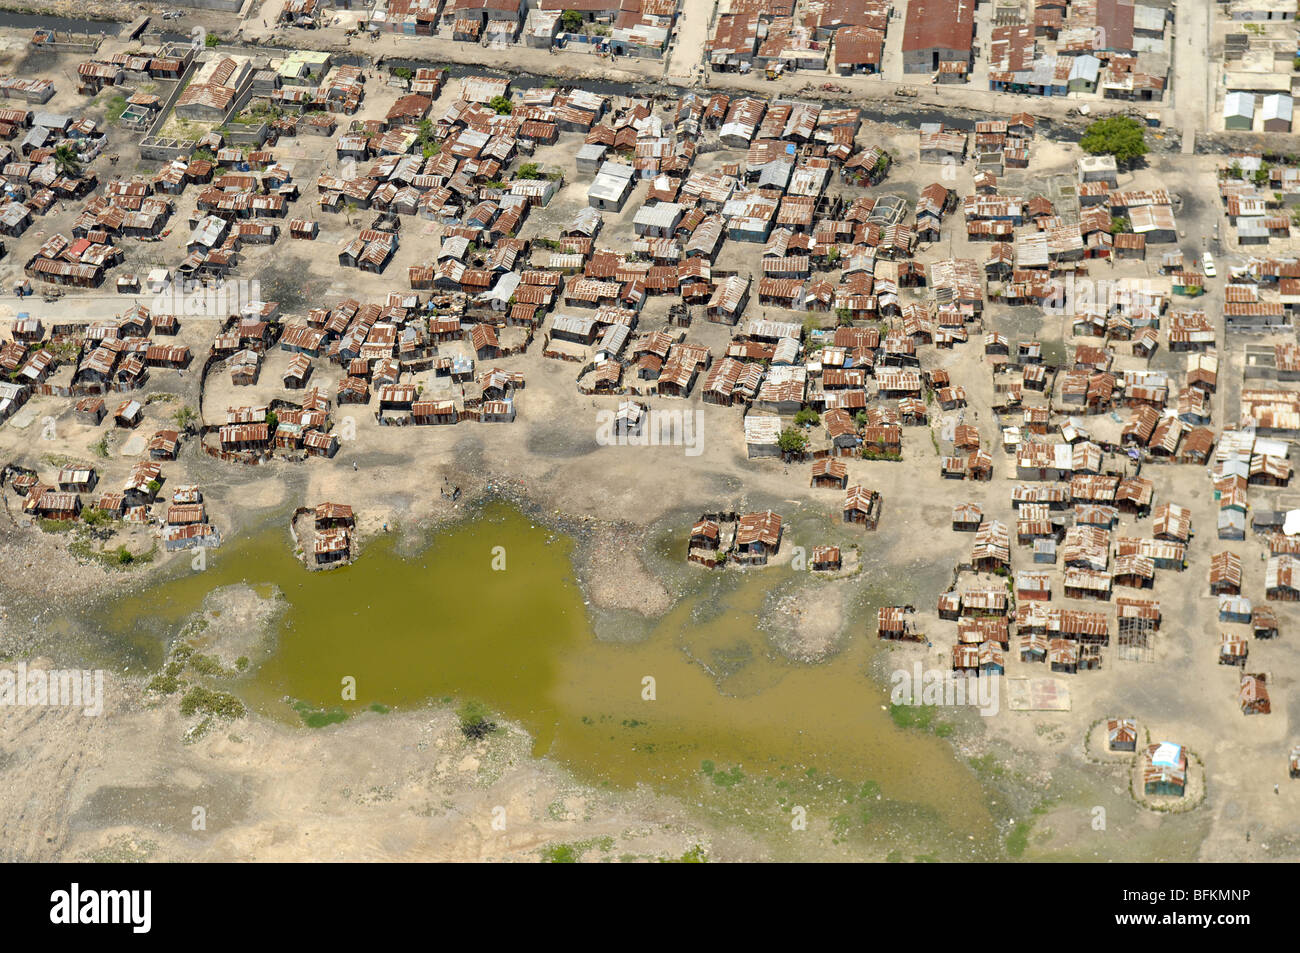 An aerial view of slum housing in Haiti. Stock Photo